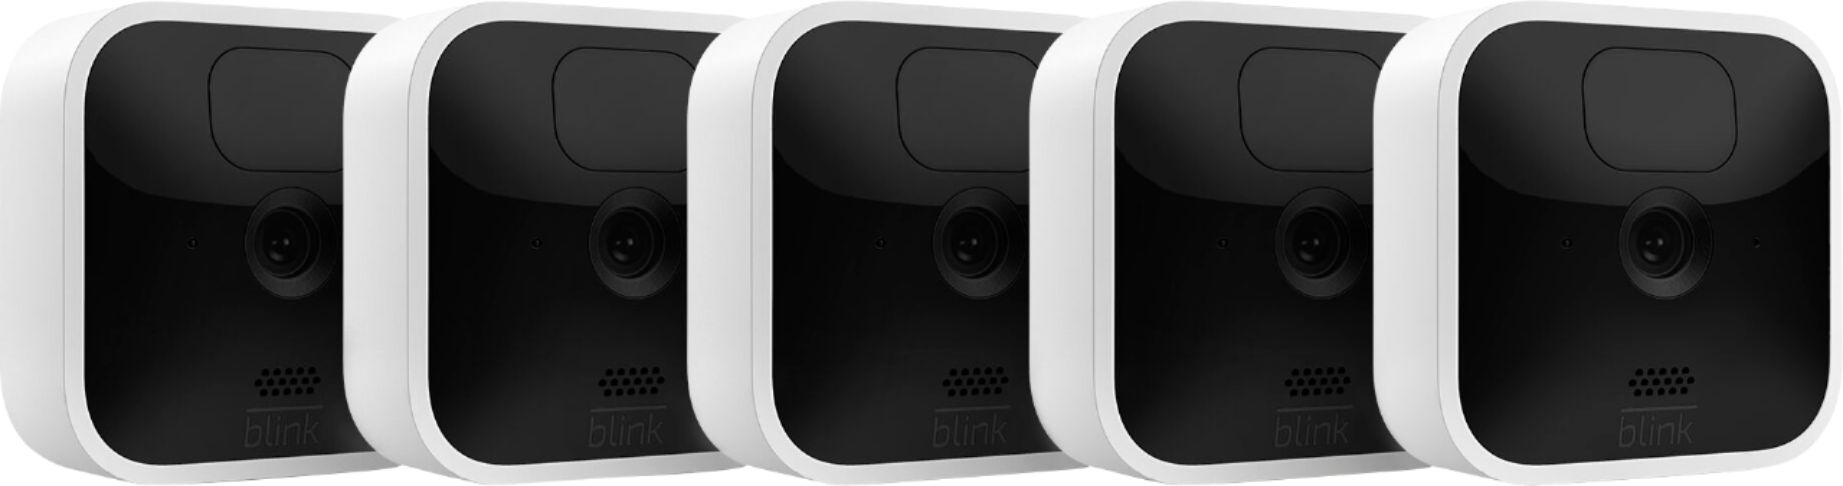 Blink Mini Pan-Tilt Indoor Wired 1080P Security Camera Black B09N6D5SDX -  Best Buy